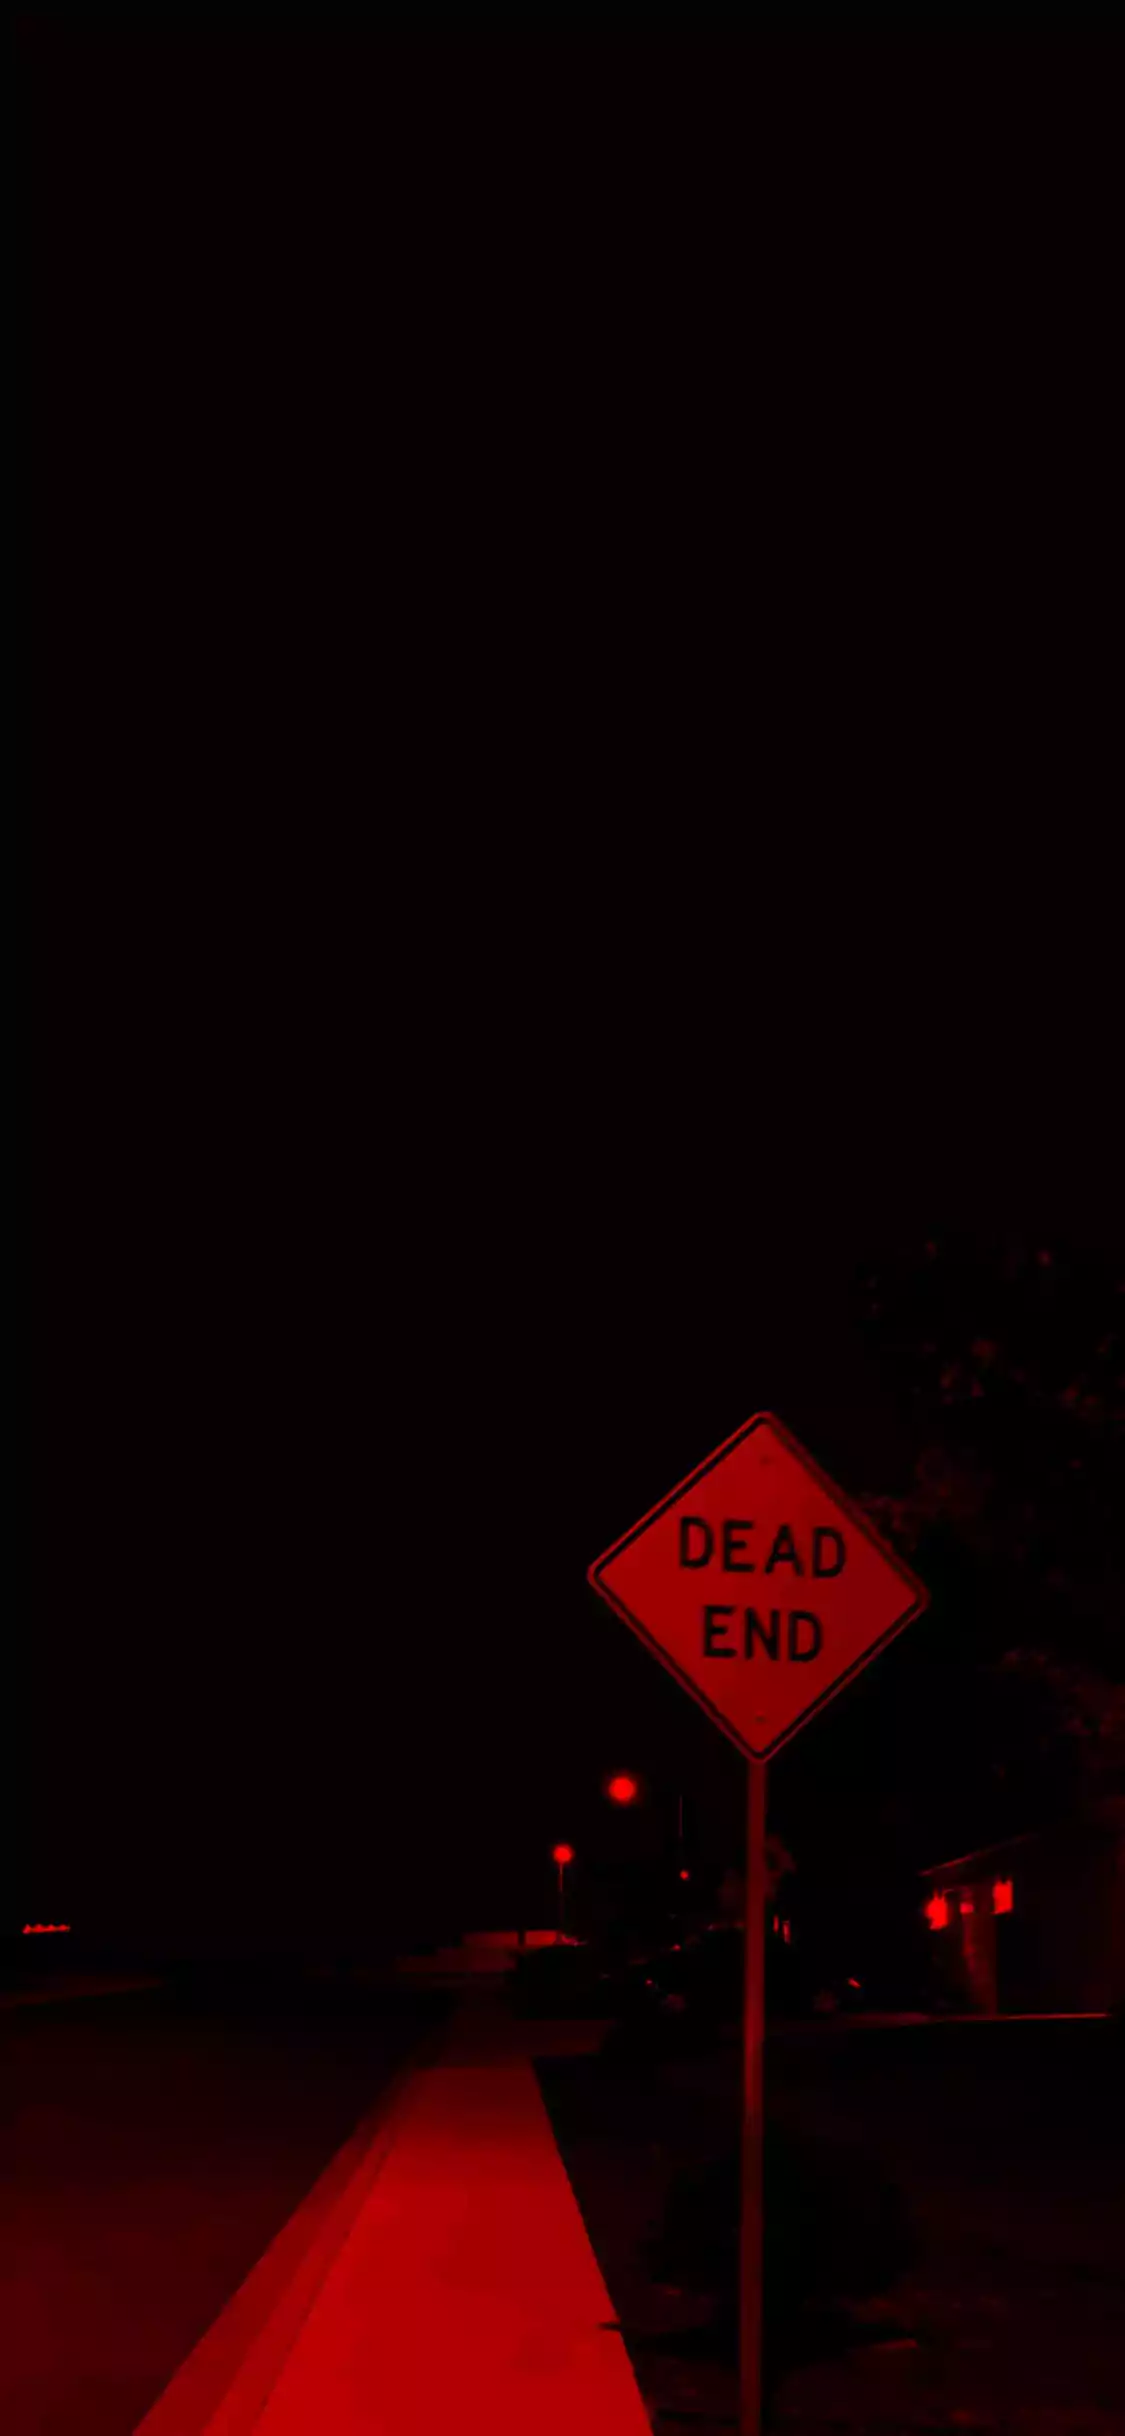 Dead End Wallpaper - NawPic